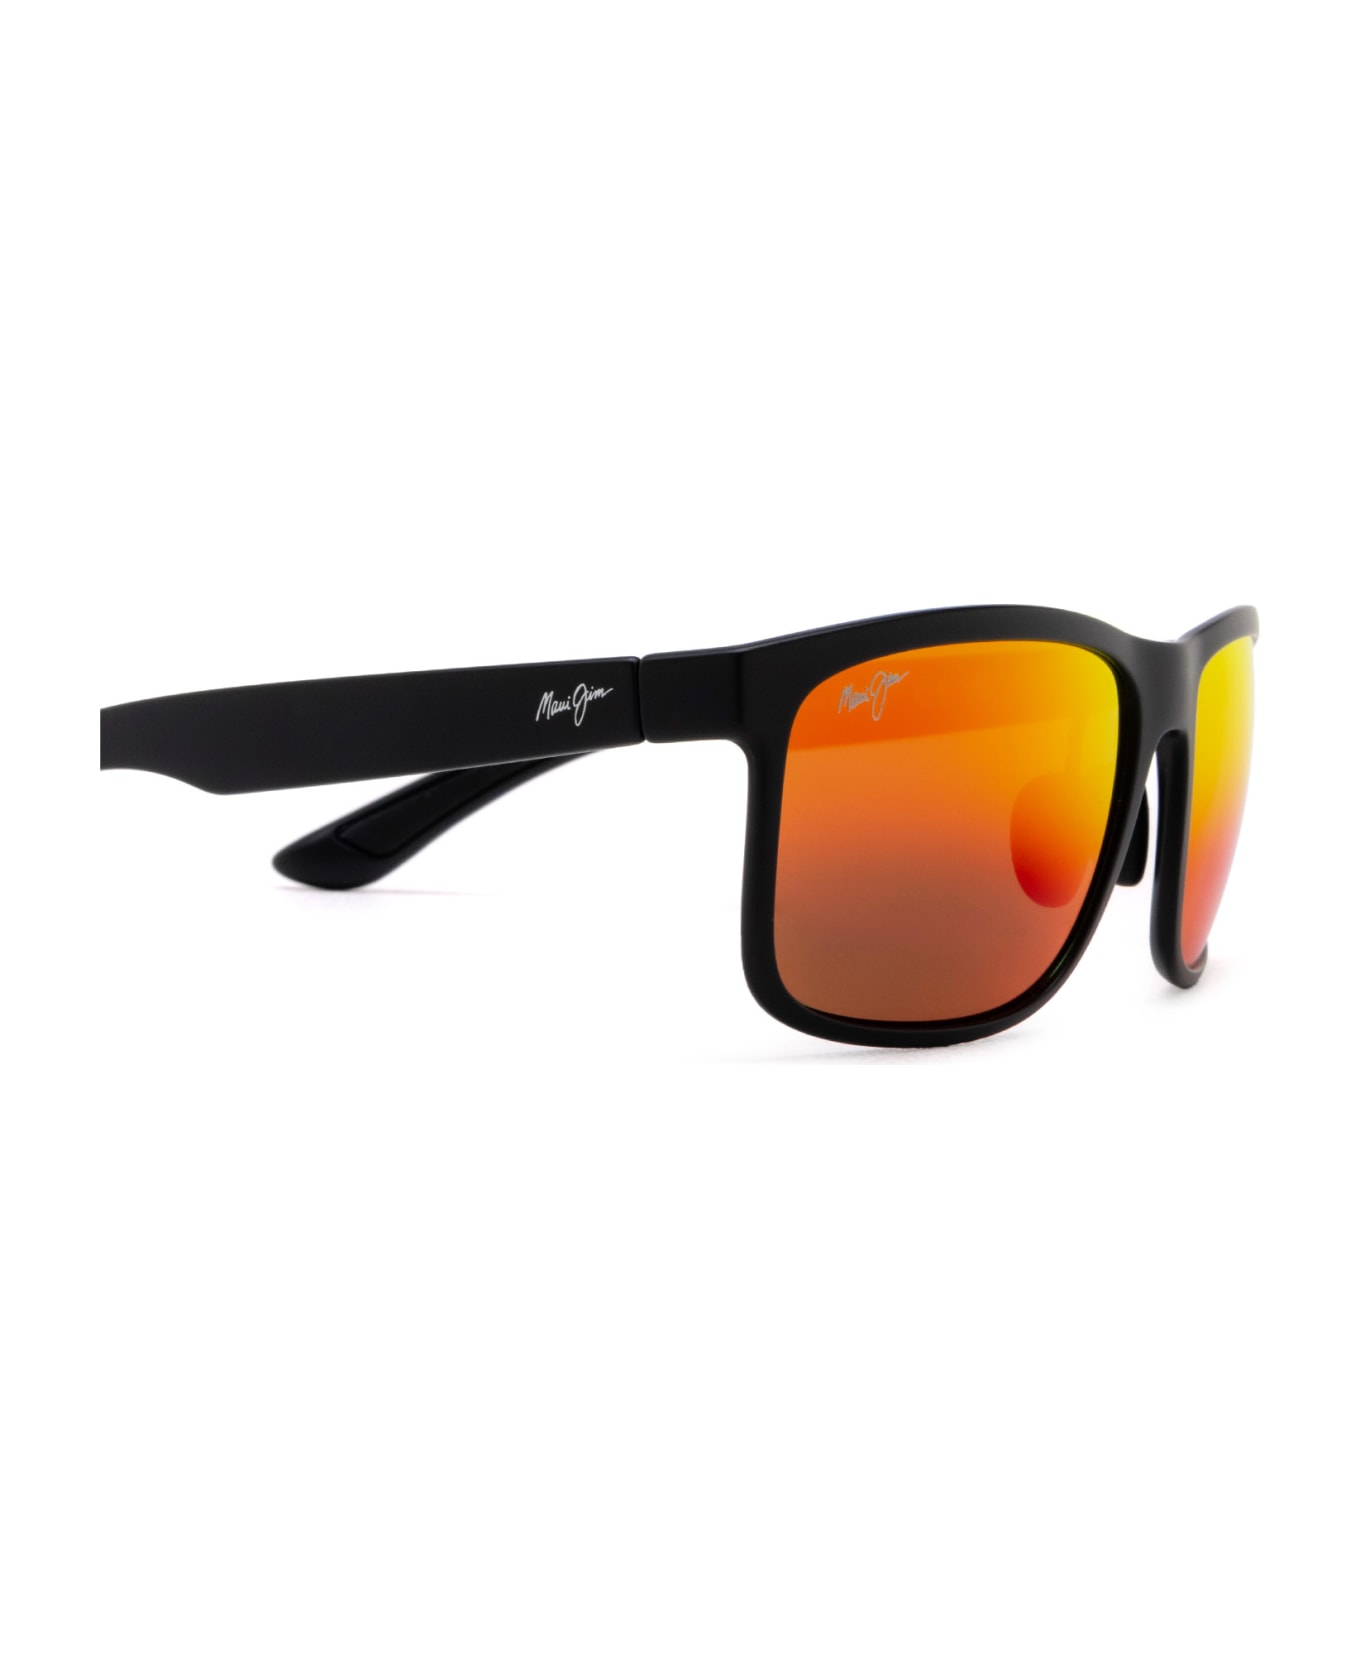 Maui Jim Mj449 Matte Black Sunglasses - Matte Black サングラス